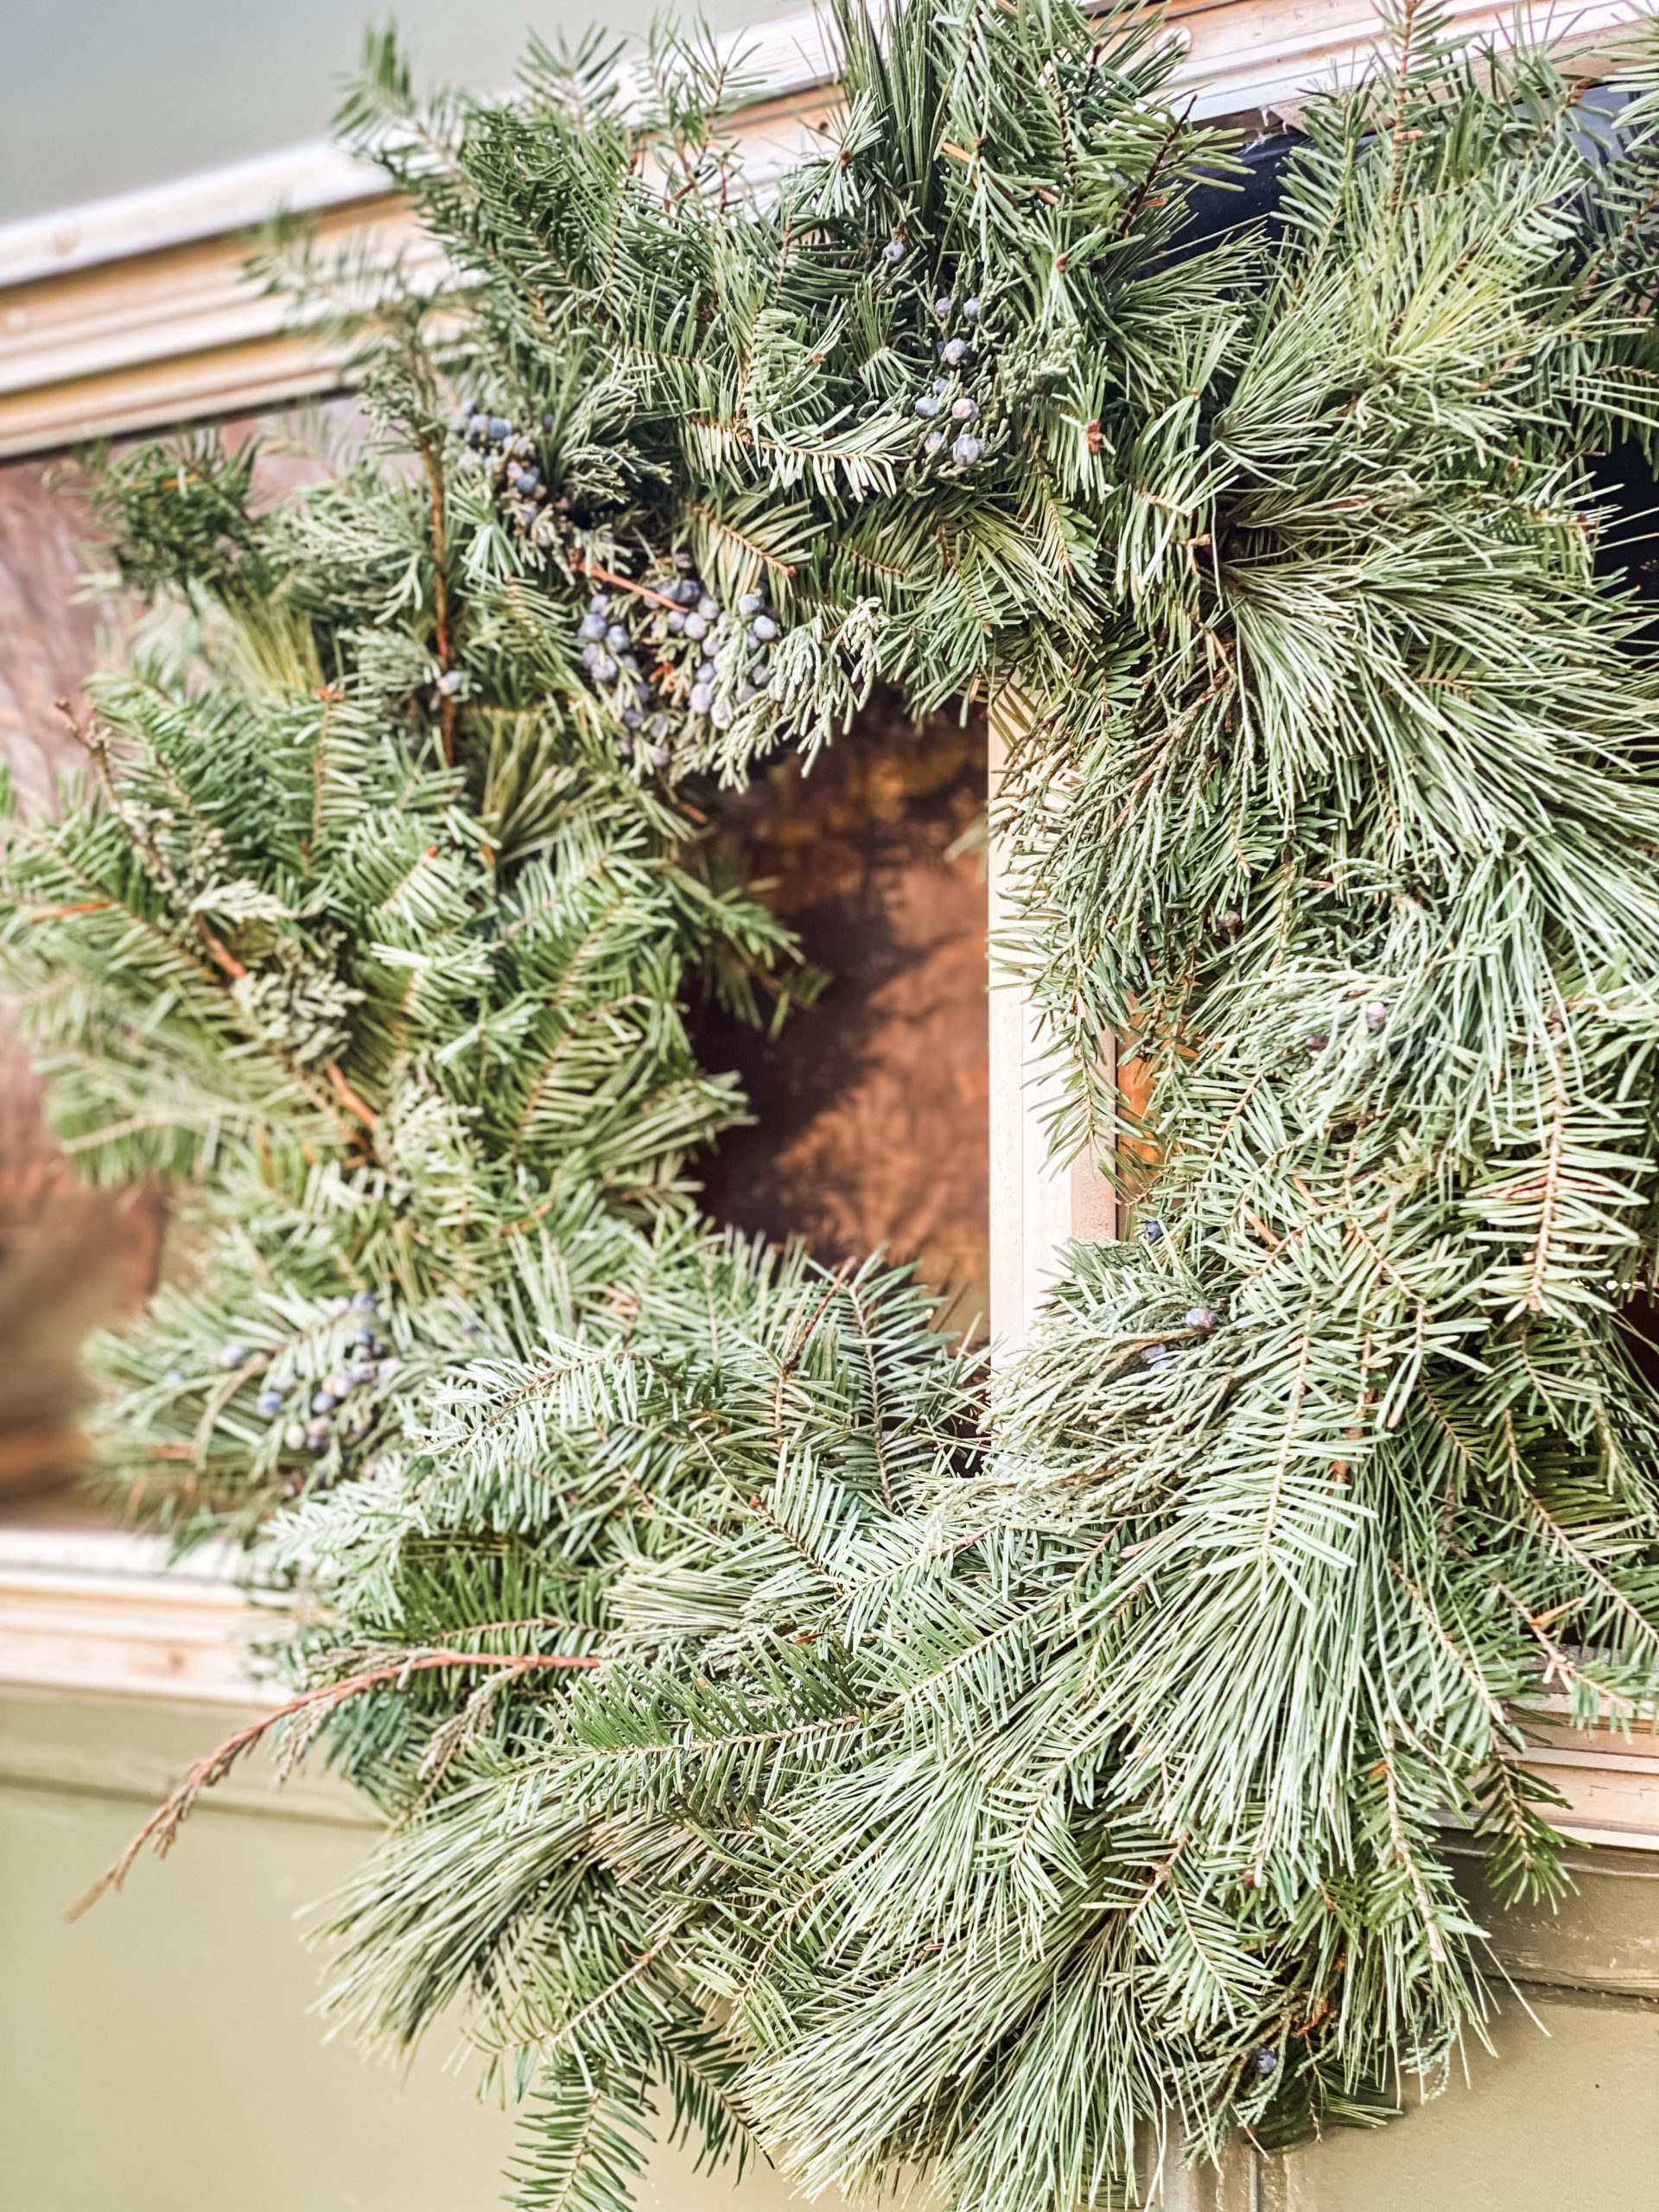 Pining for more: Pine branch decor keeps the season fresh